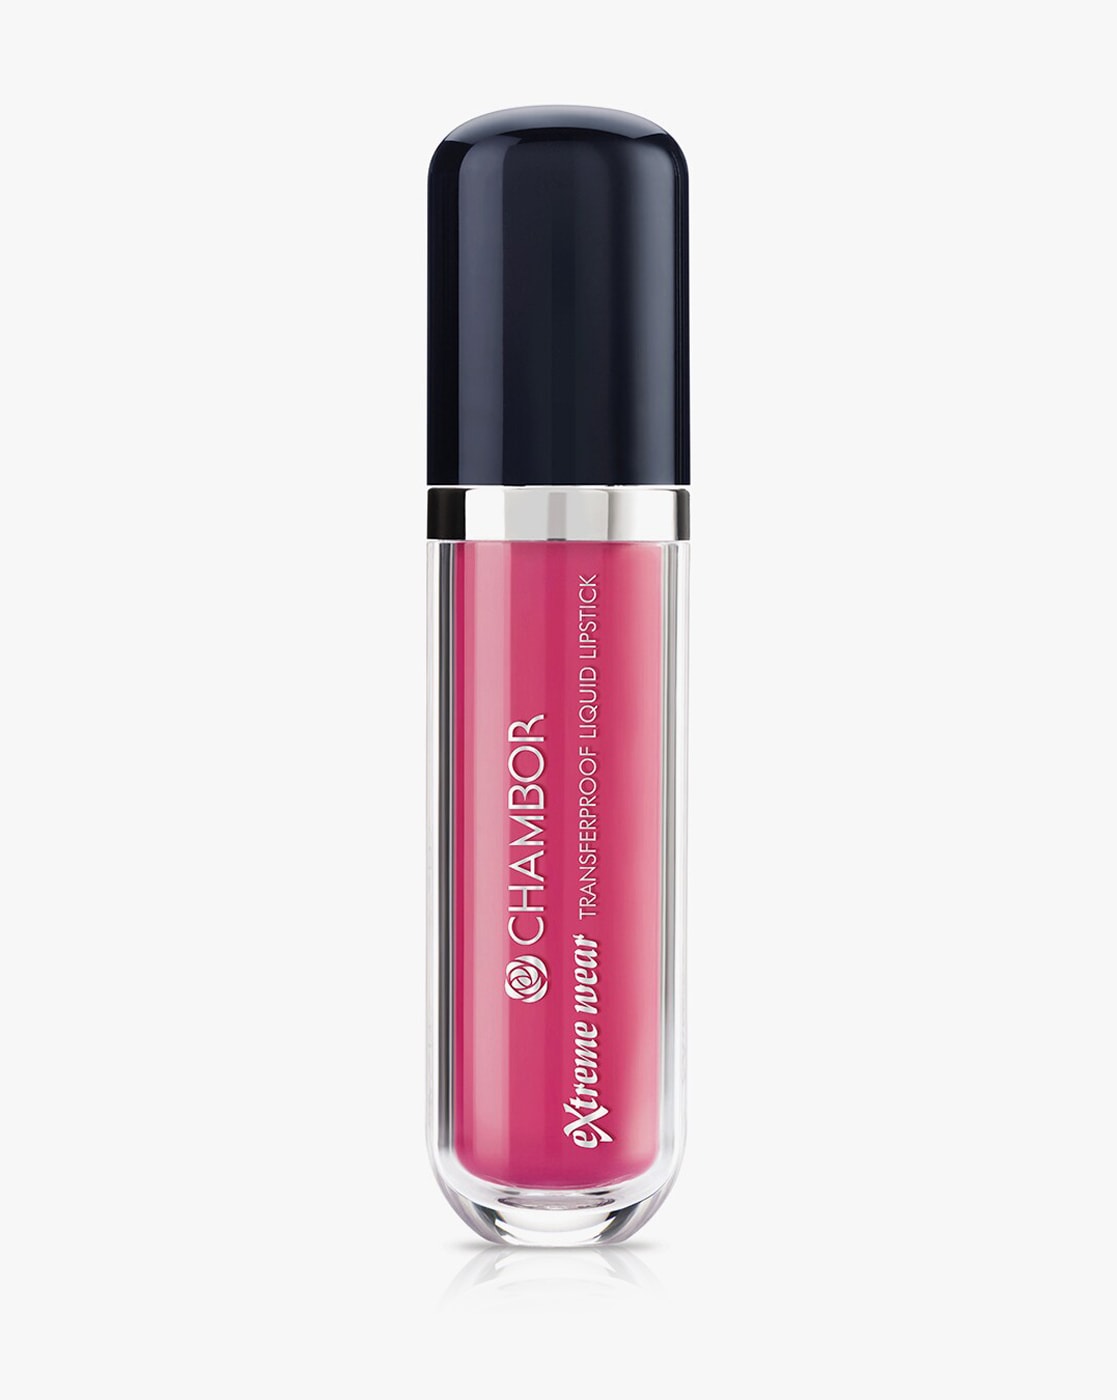 Chambor Extreme Wear Transferproof Liquid Lipstick - Diva #403